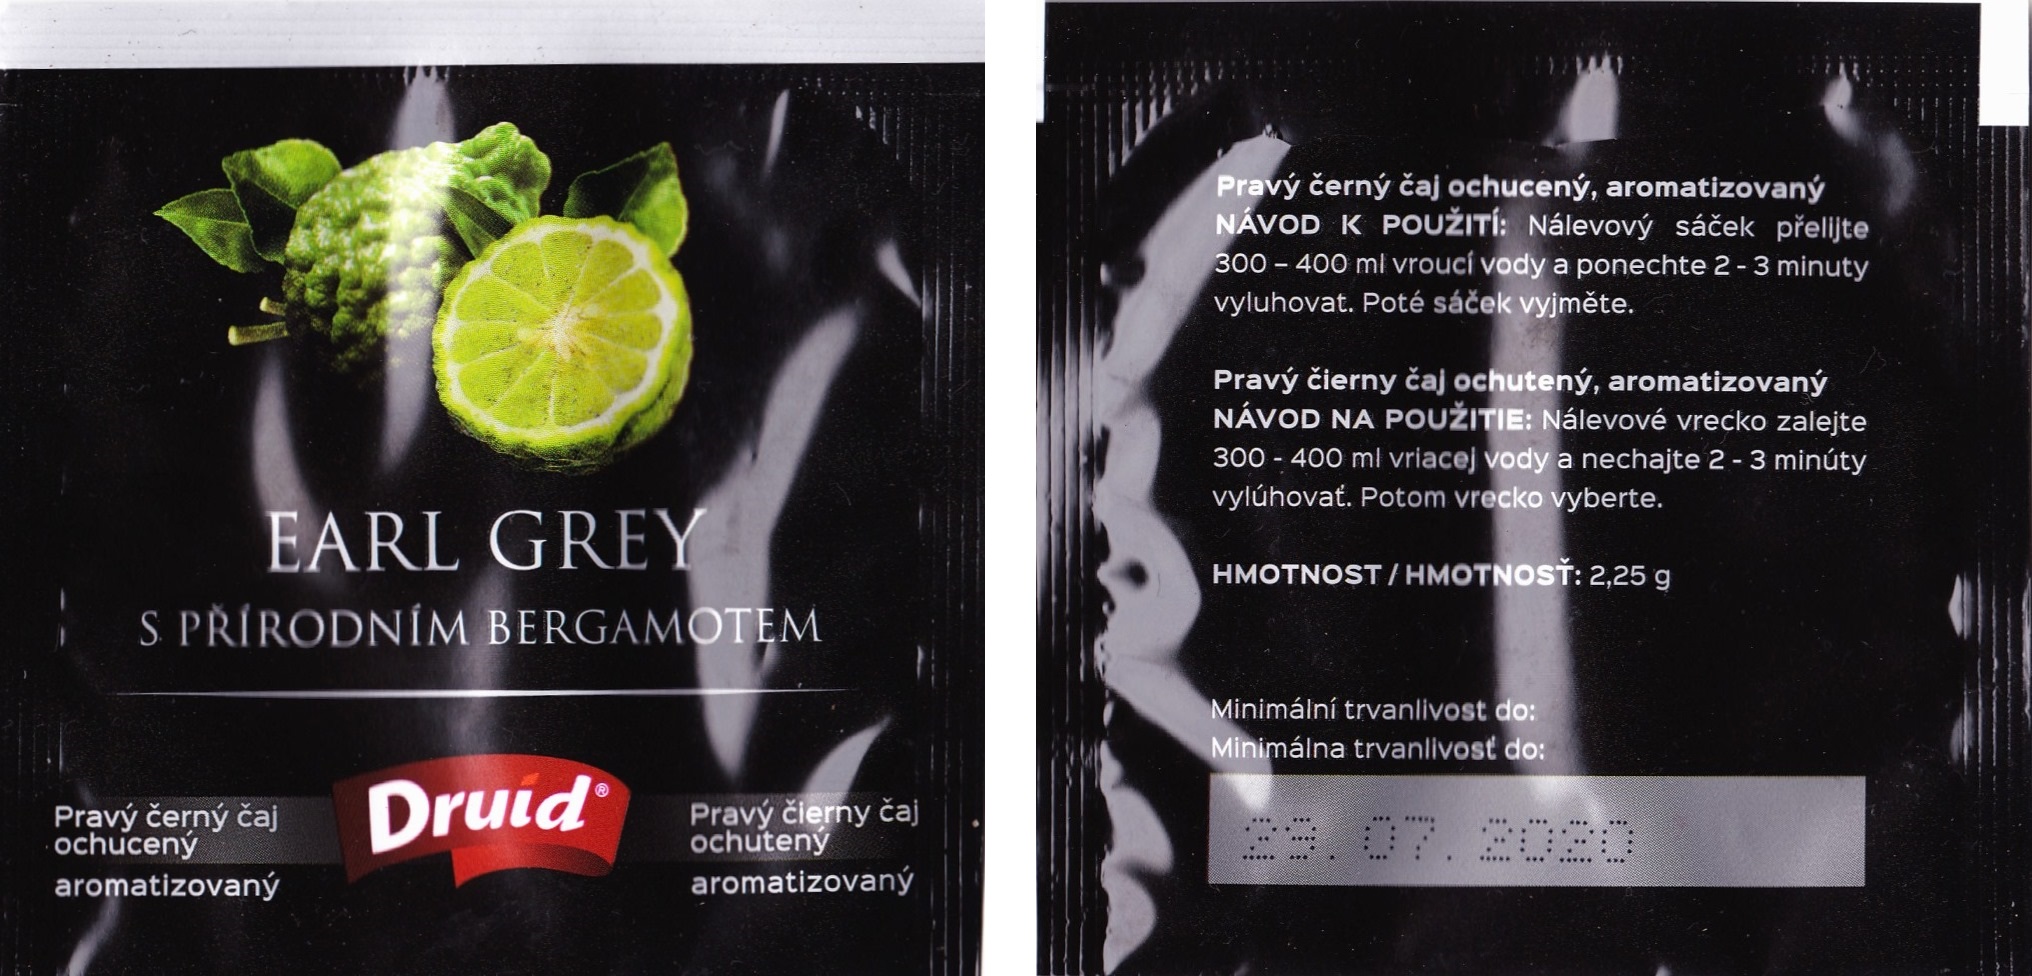 Druid - Earl Grey s přírodním bergamotem